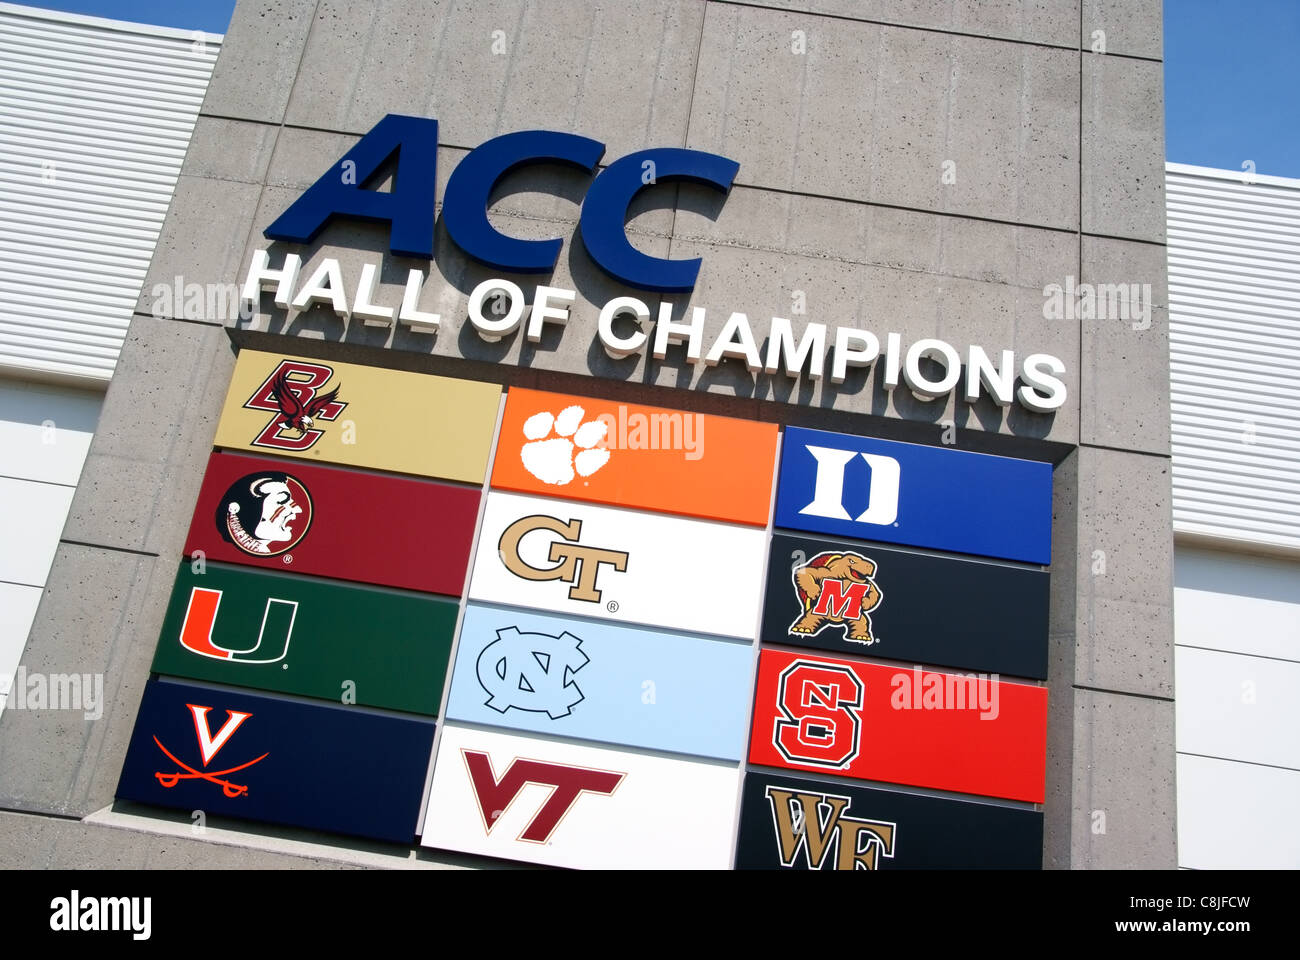 ACC Hall of Champions, Greensboro, NC, North Carolina Stock Photo